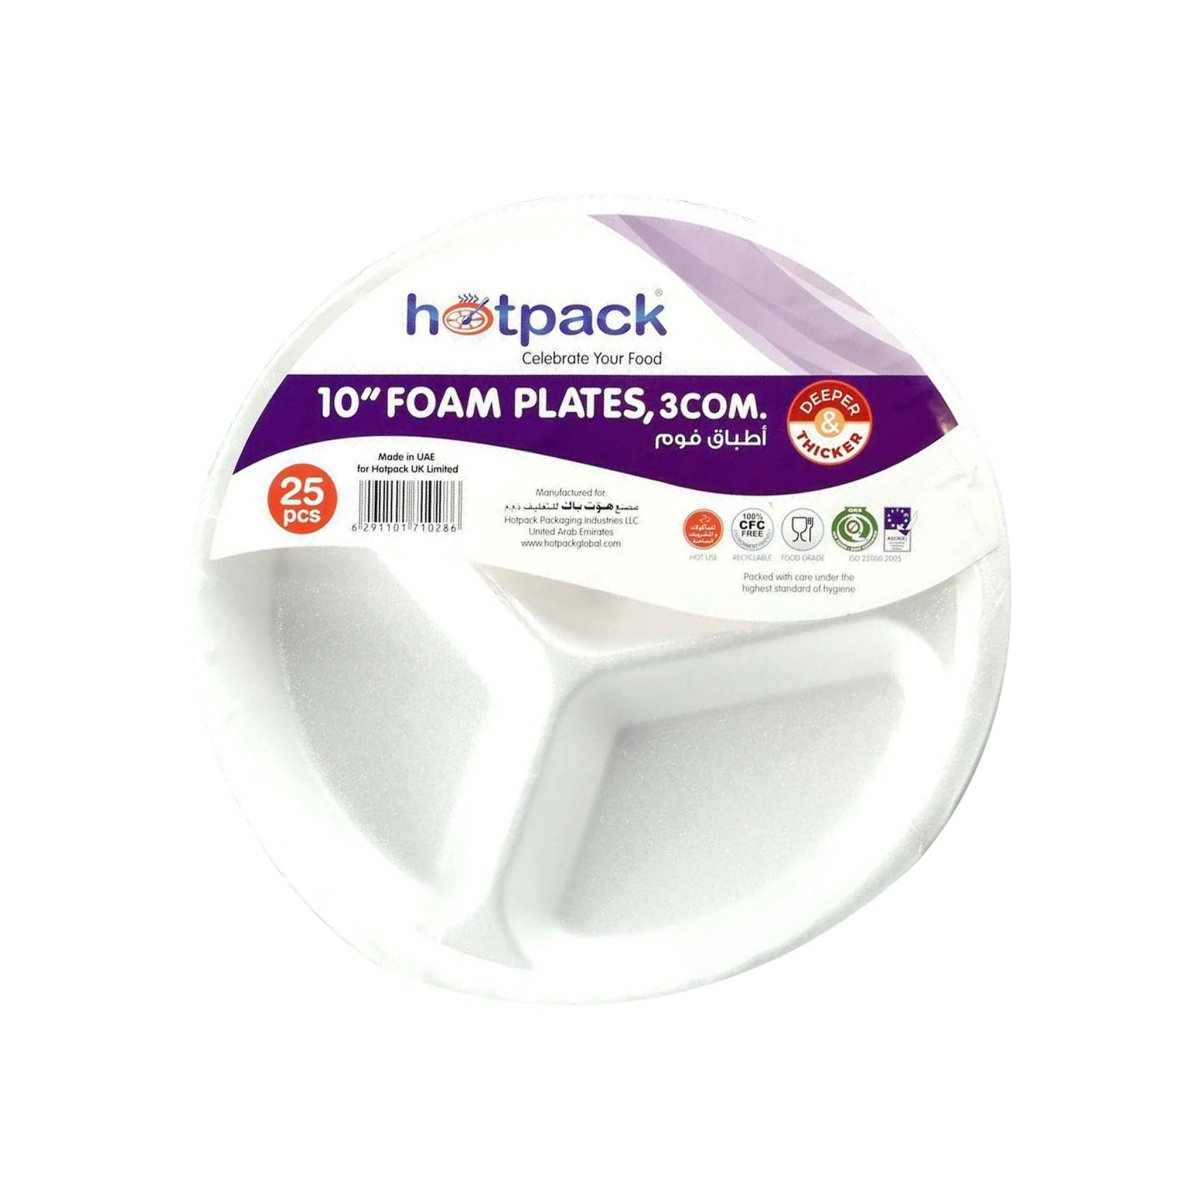 Foam Plates 10 Inch 3 Compartment - hotpackwebstore.com - Foam Plates